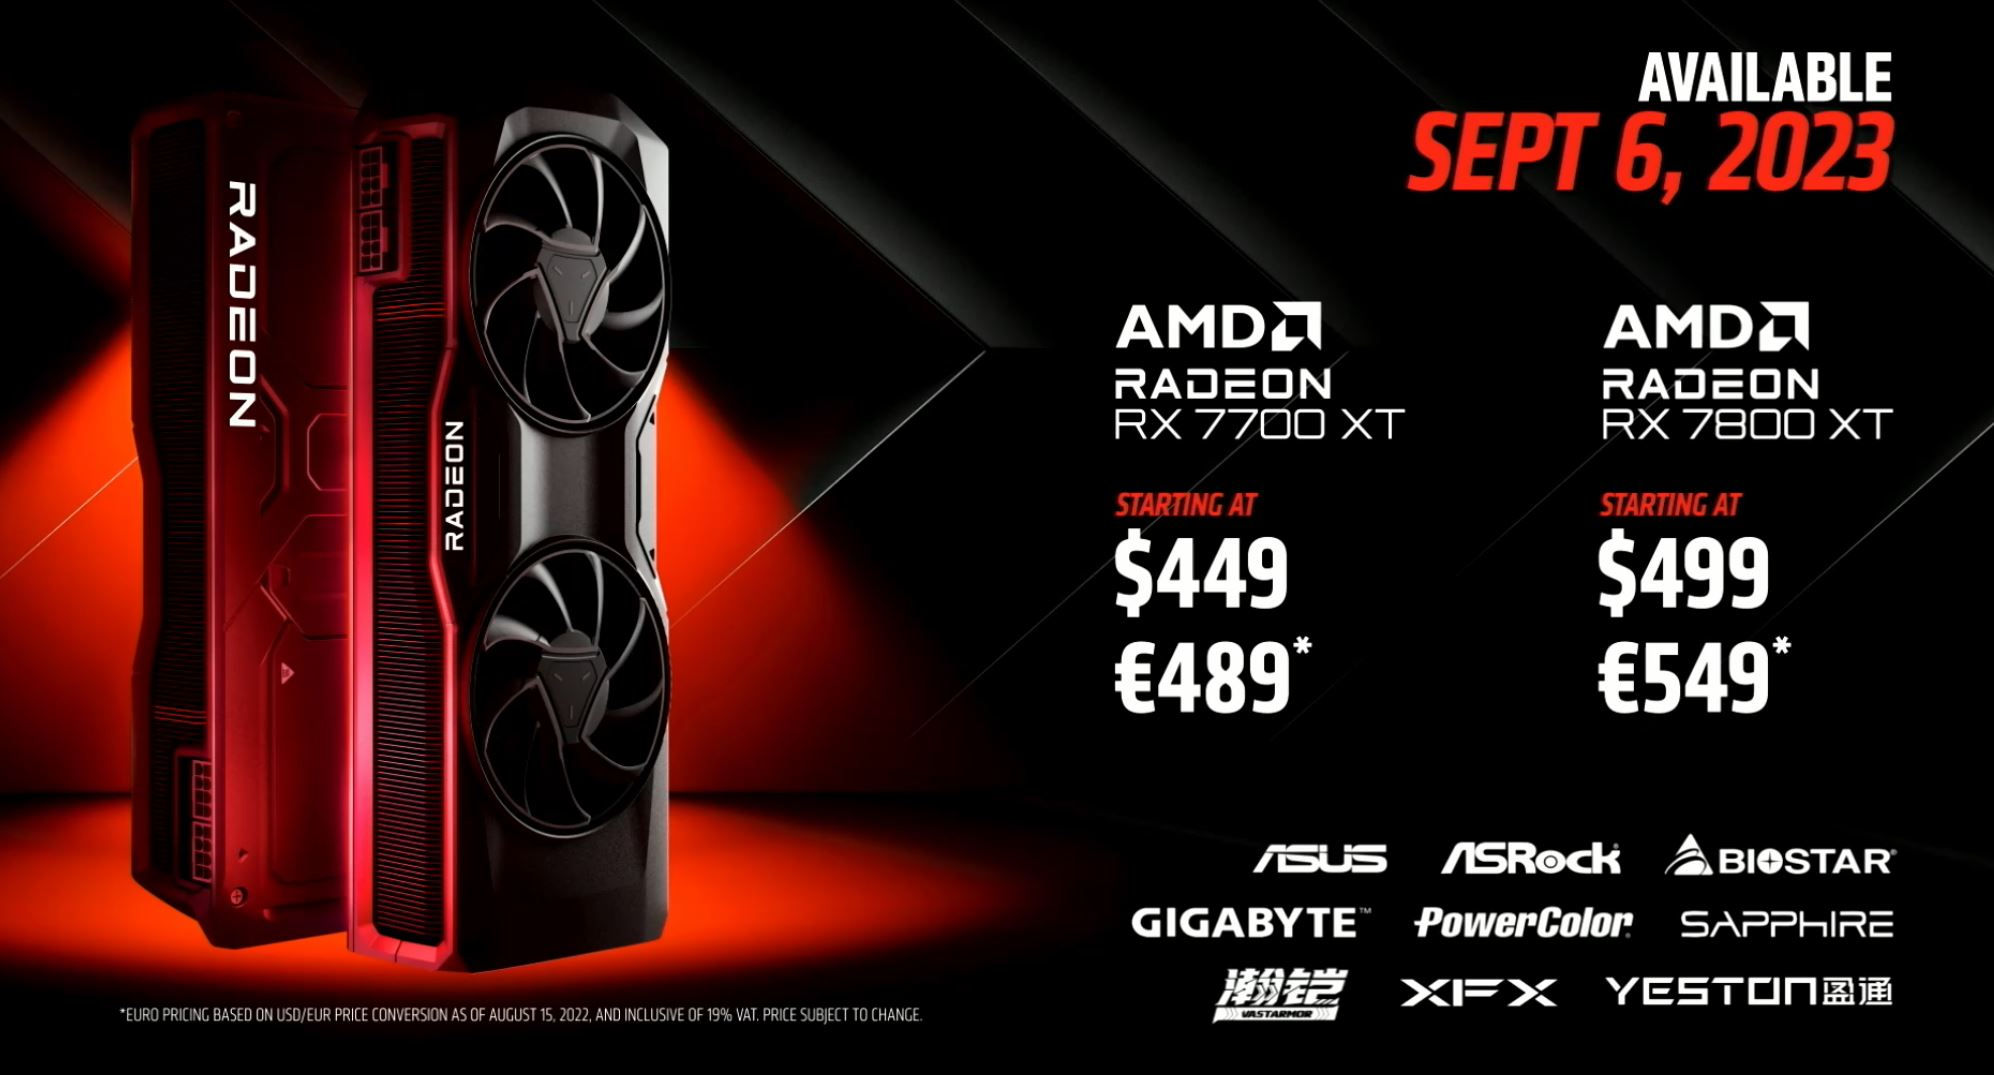 AMD-RX7800-7700-PRICING-RELEASE-DATE.jpg